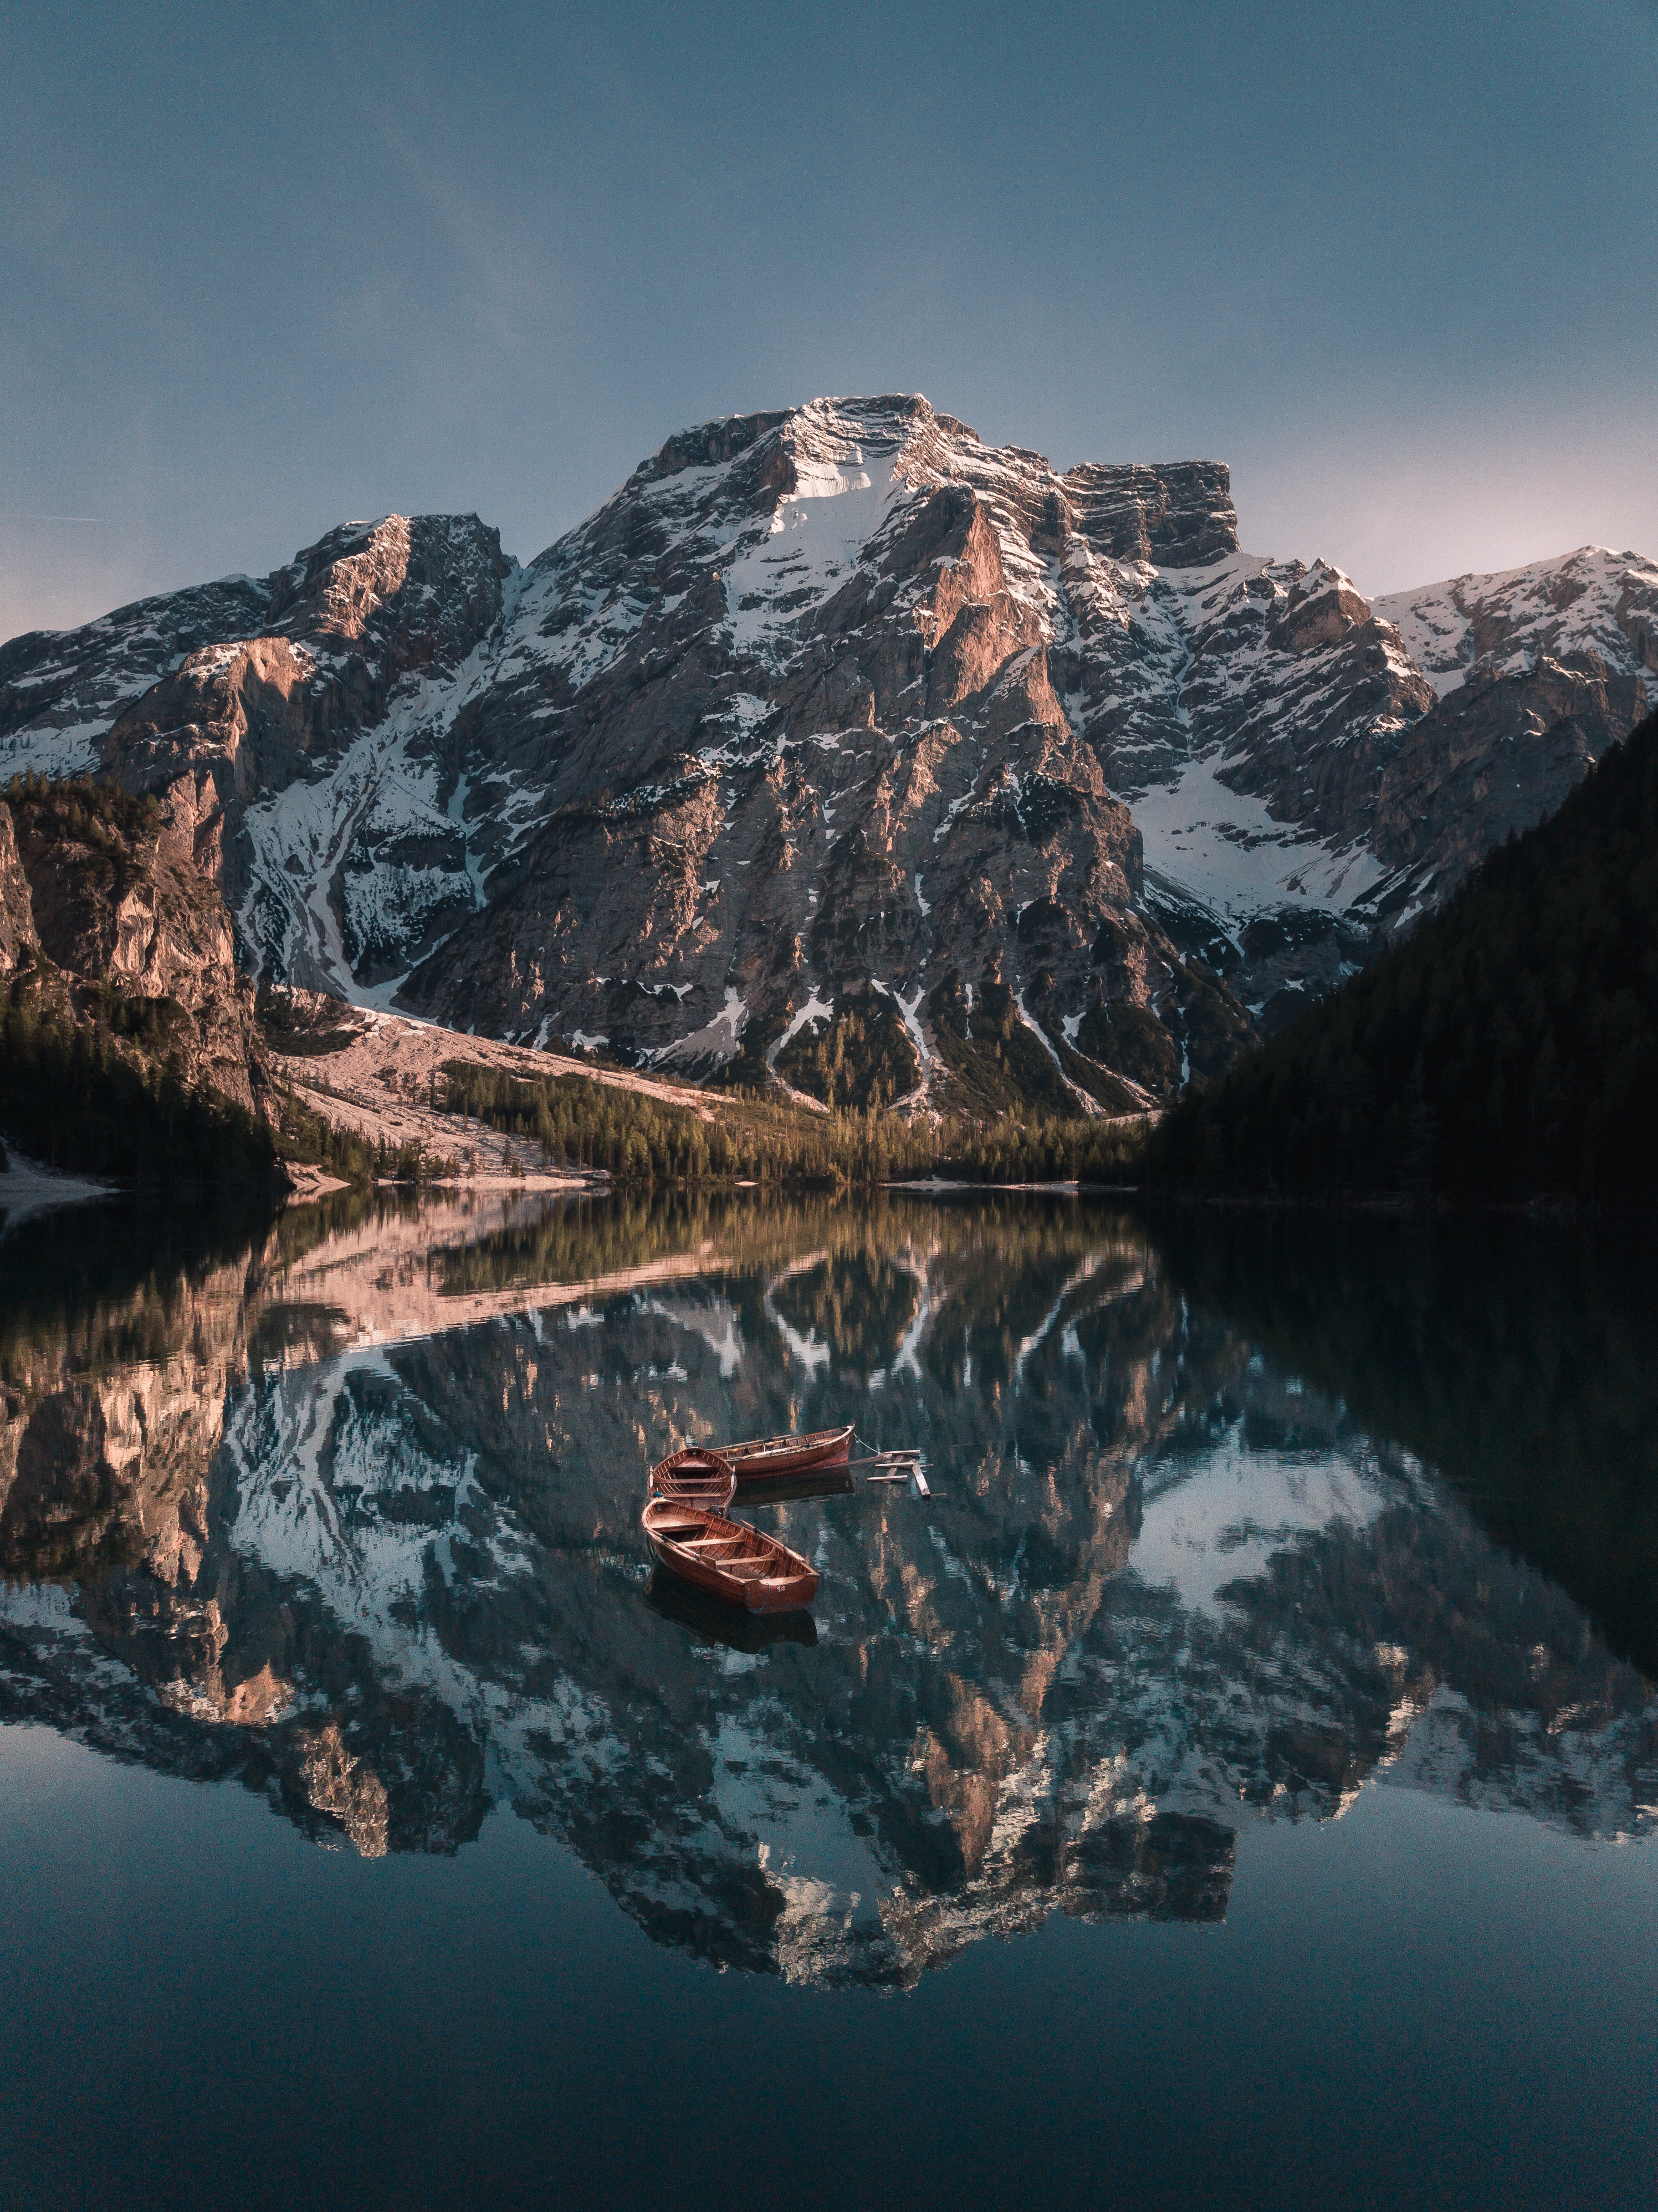 mountains, reflection, lake, landscape, nature, boats